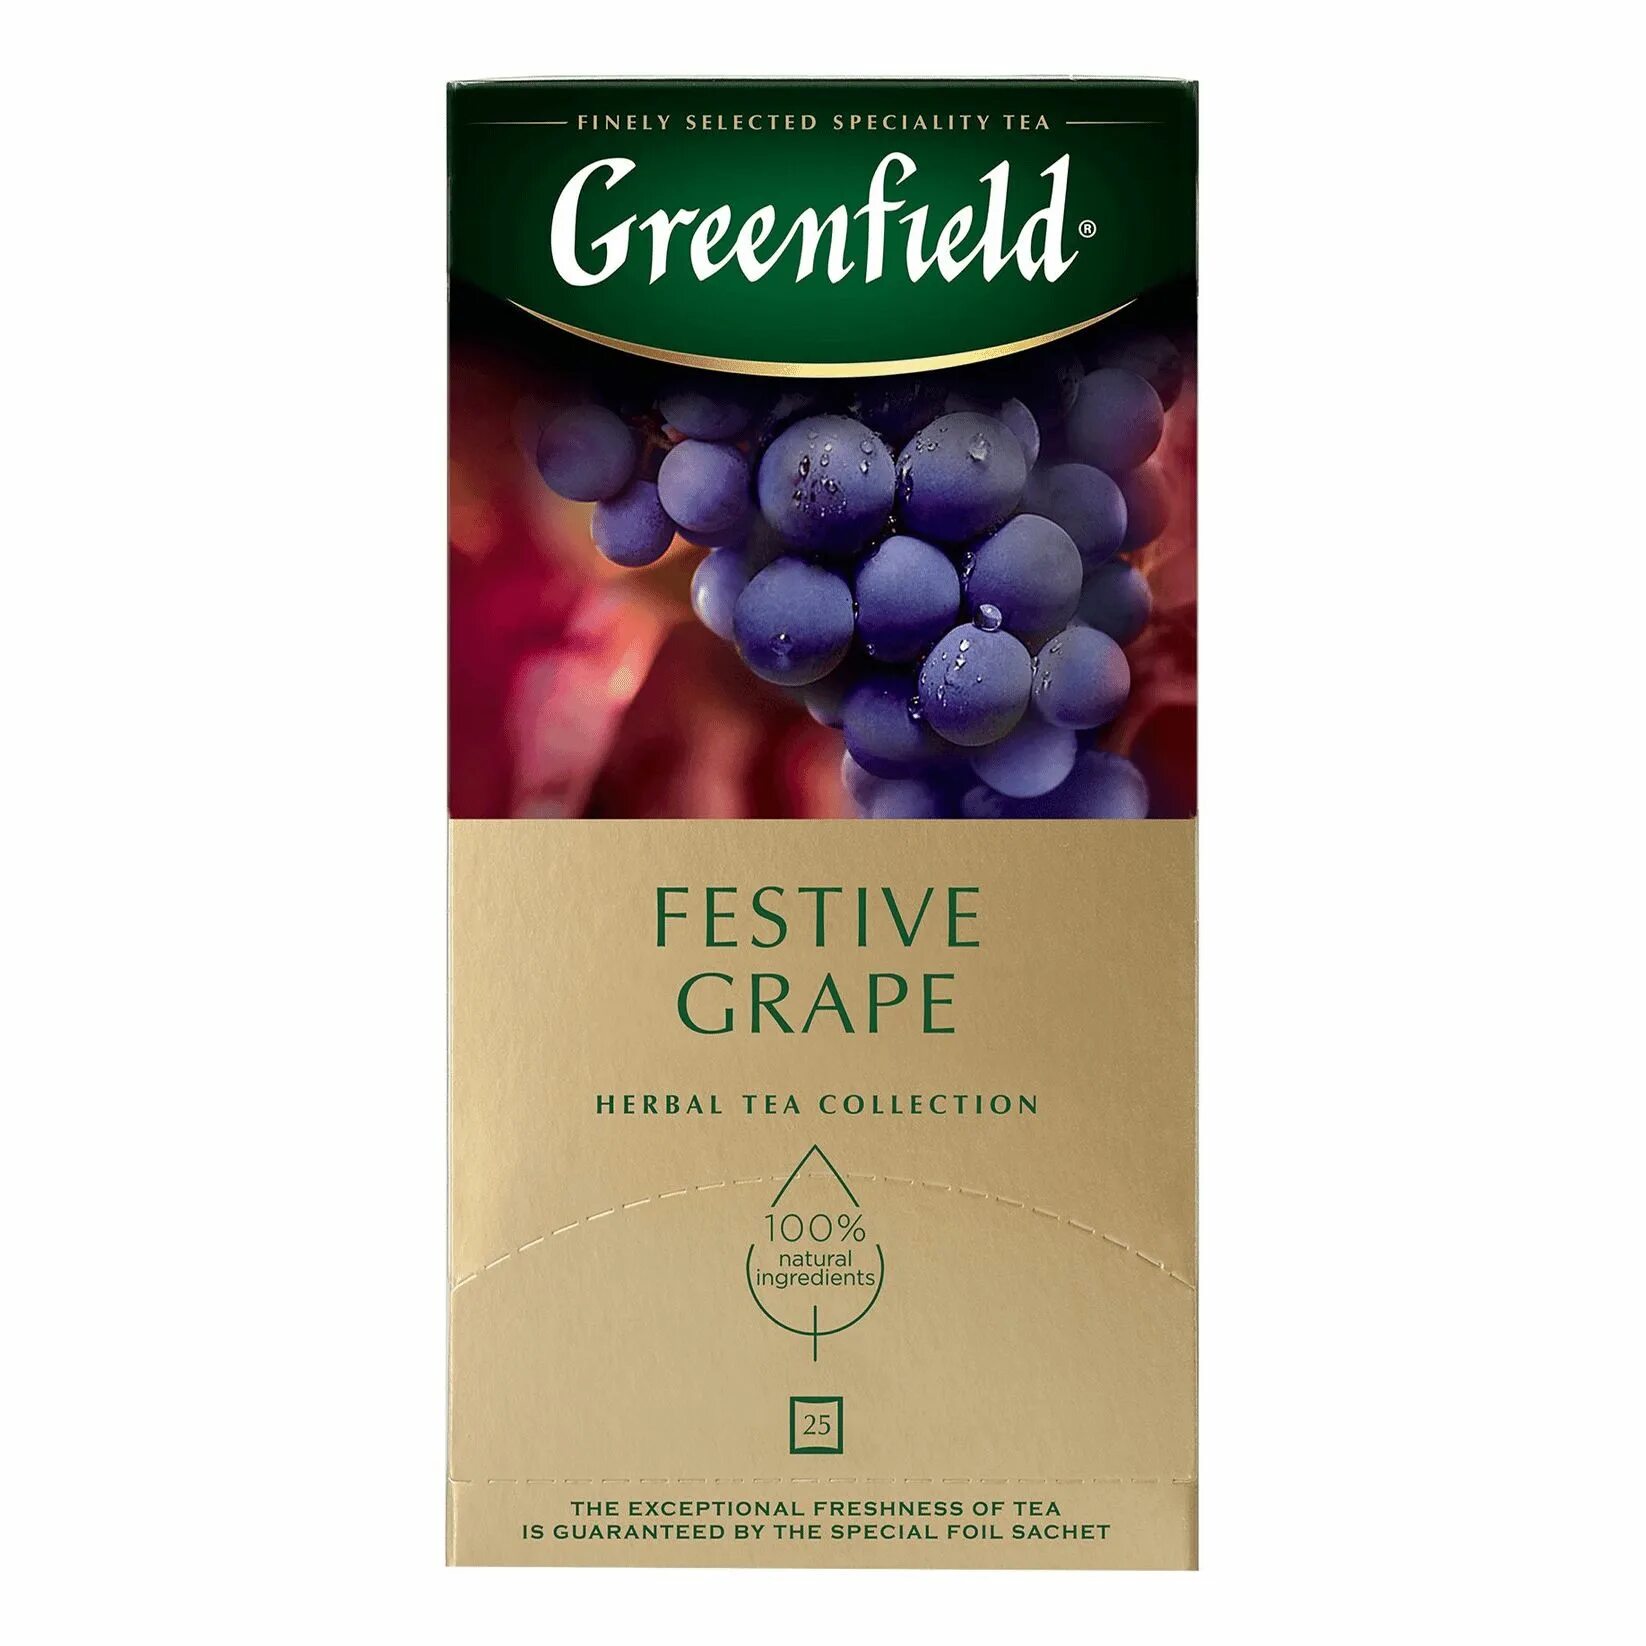 Чай Greenfield festive grape. Гринфилд чай с виноградом красный. Чай Greenfield festive grape фруктовый. Чай в пакетиках травяной Greenfield festive grape.